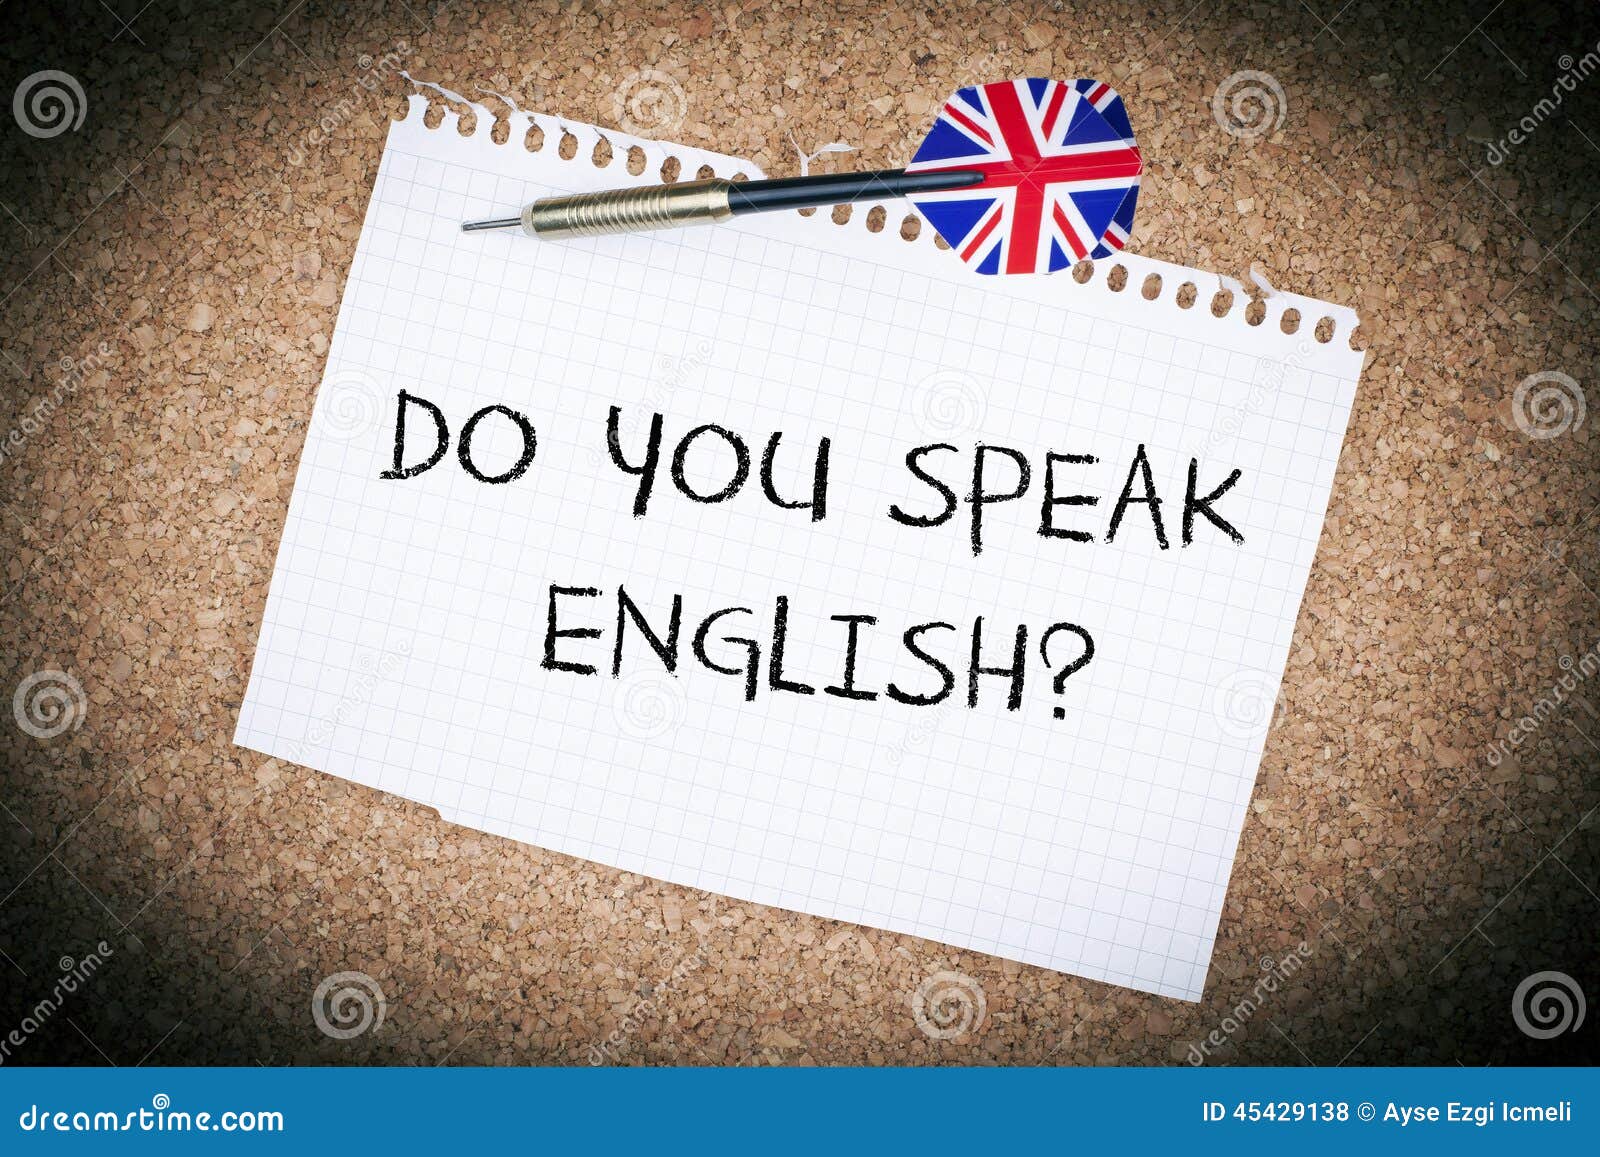 Do you speak english yes. Английский do you speak English. Do you speak English картинки. Do you speak English надпись. Плакат do you speak English.